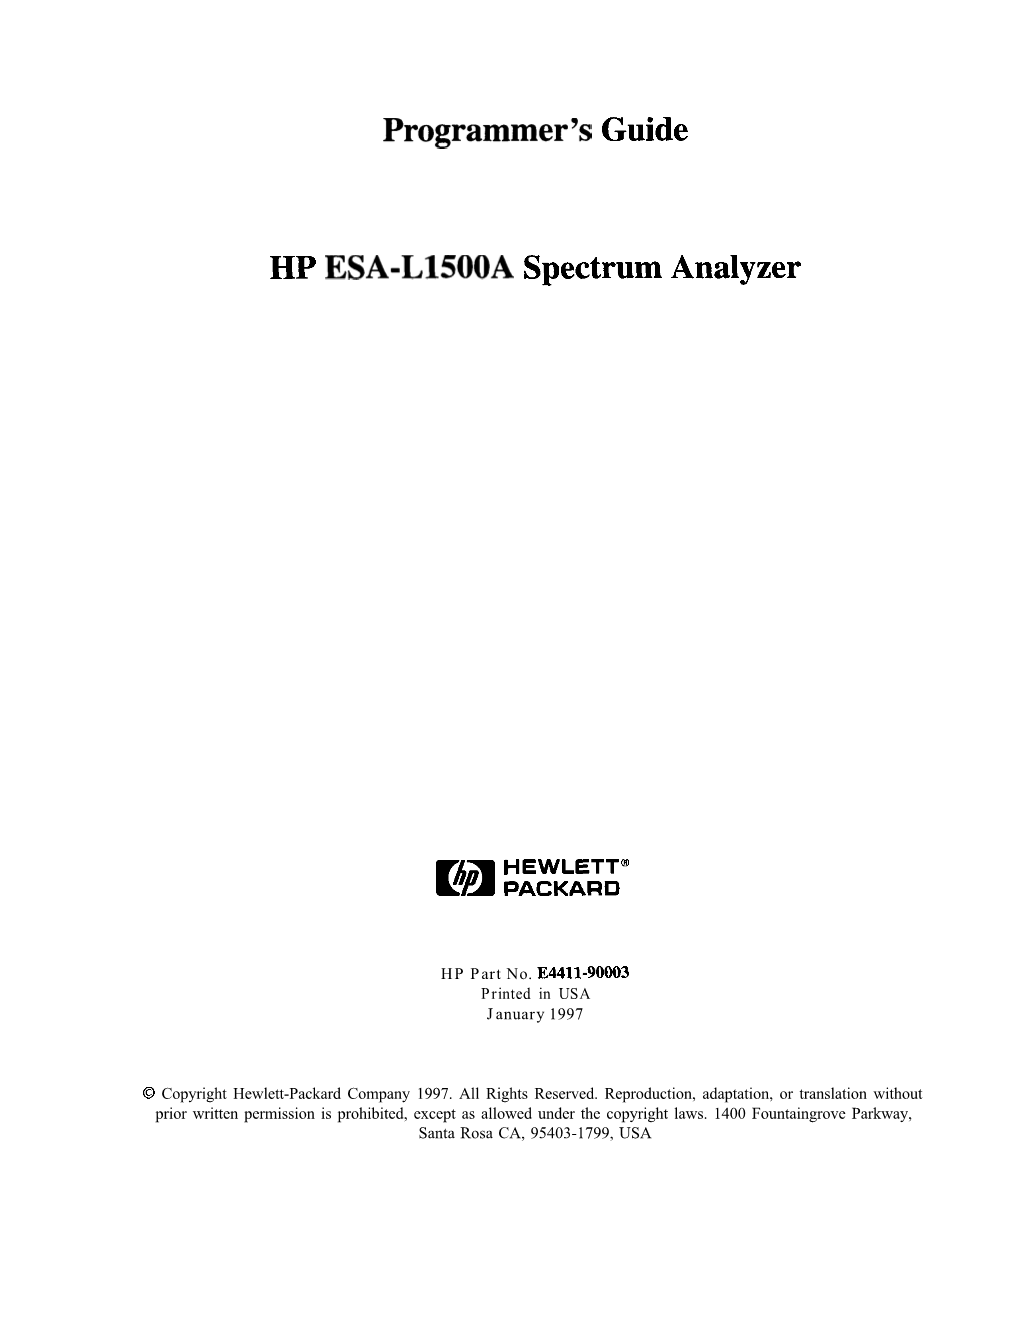 HP ESA-L1500A Spectrum Analyzer Programmer's Guide